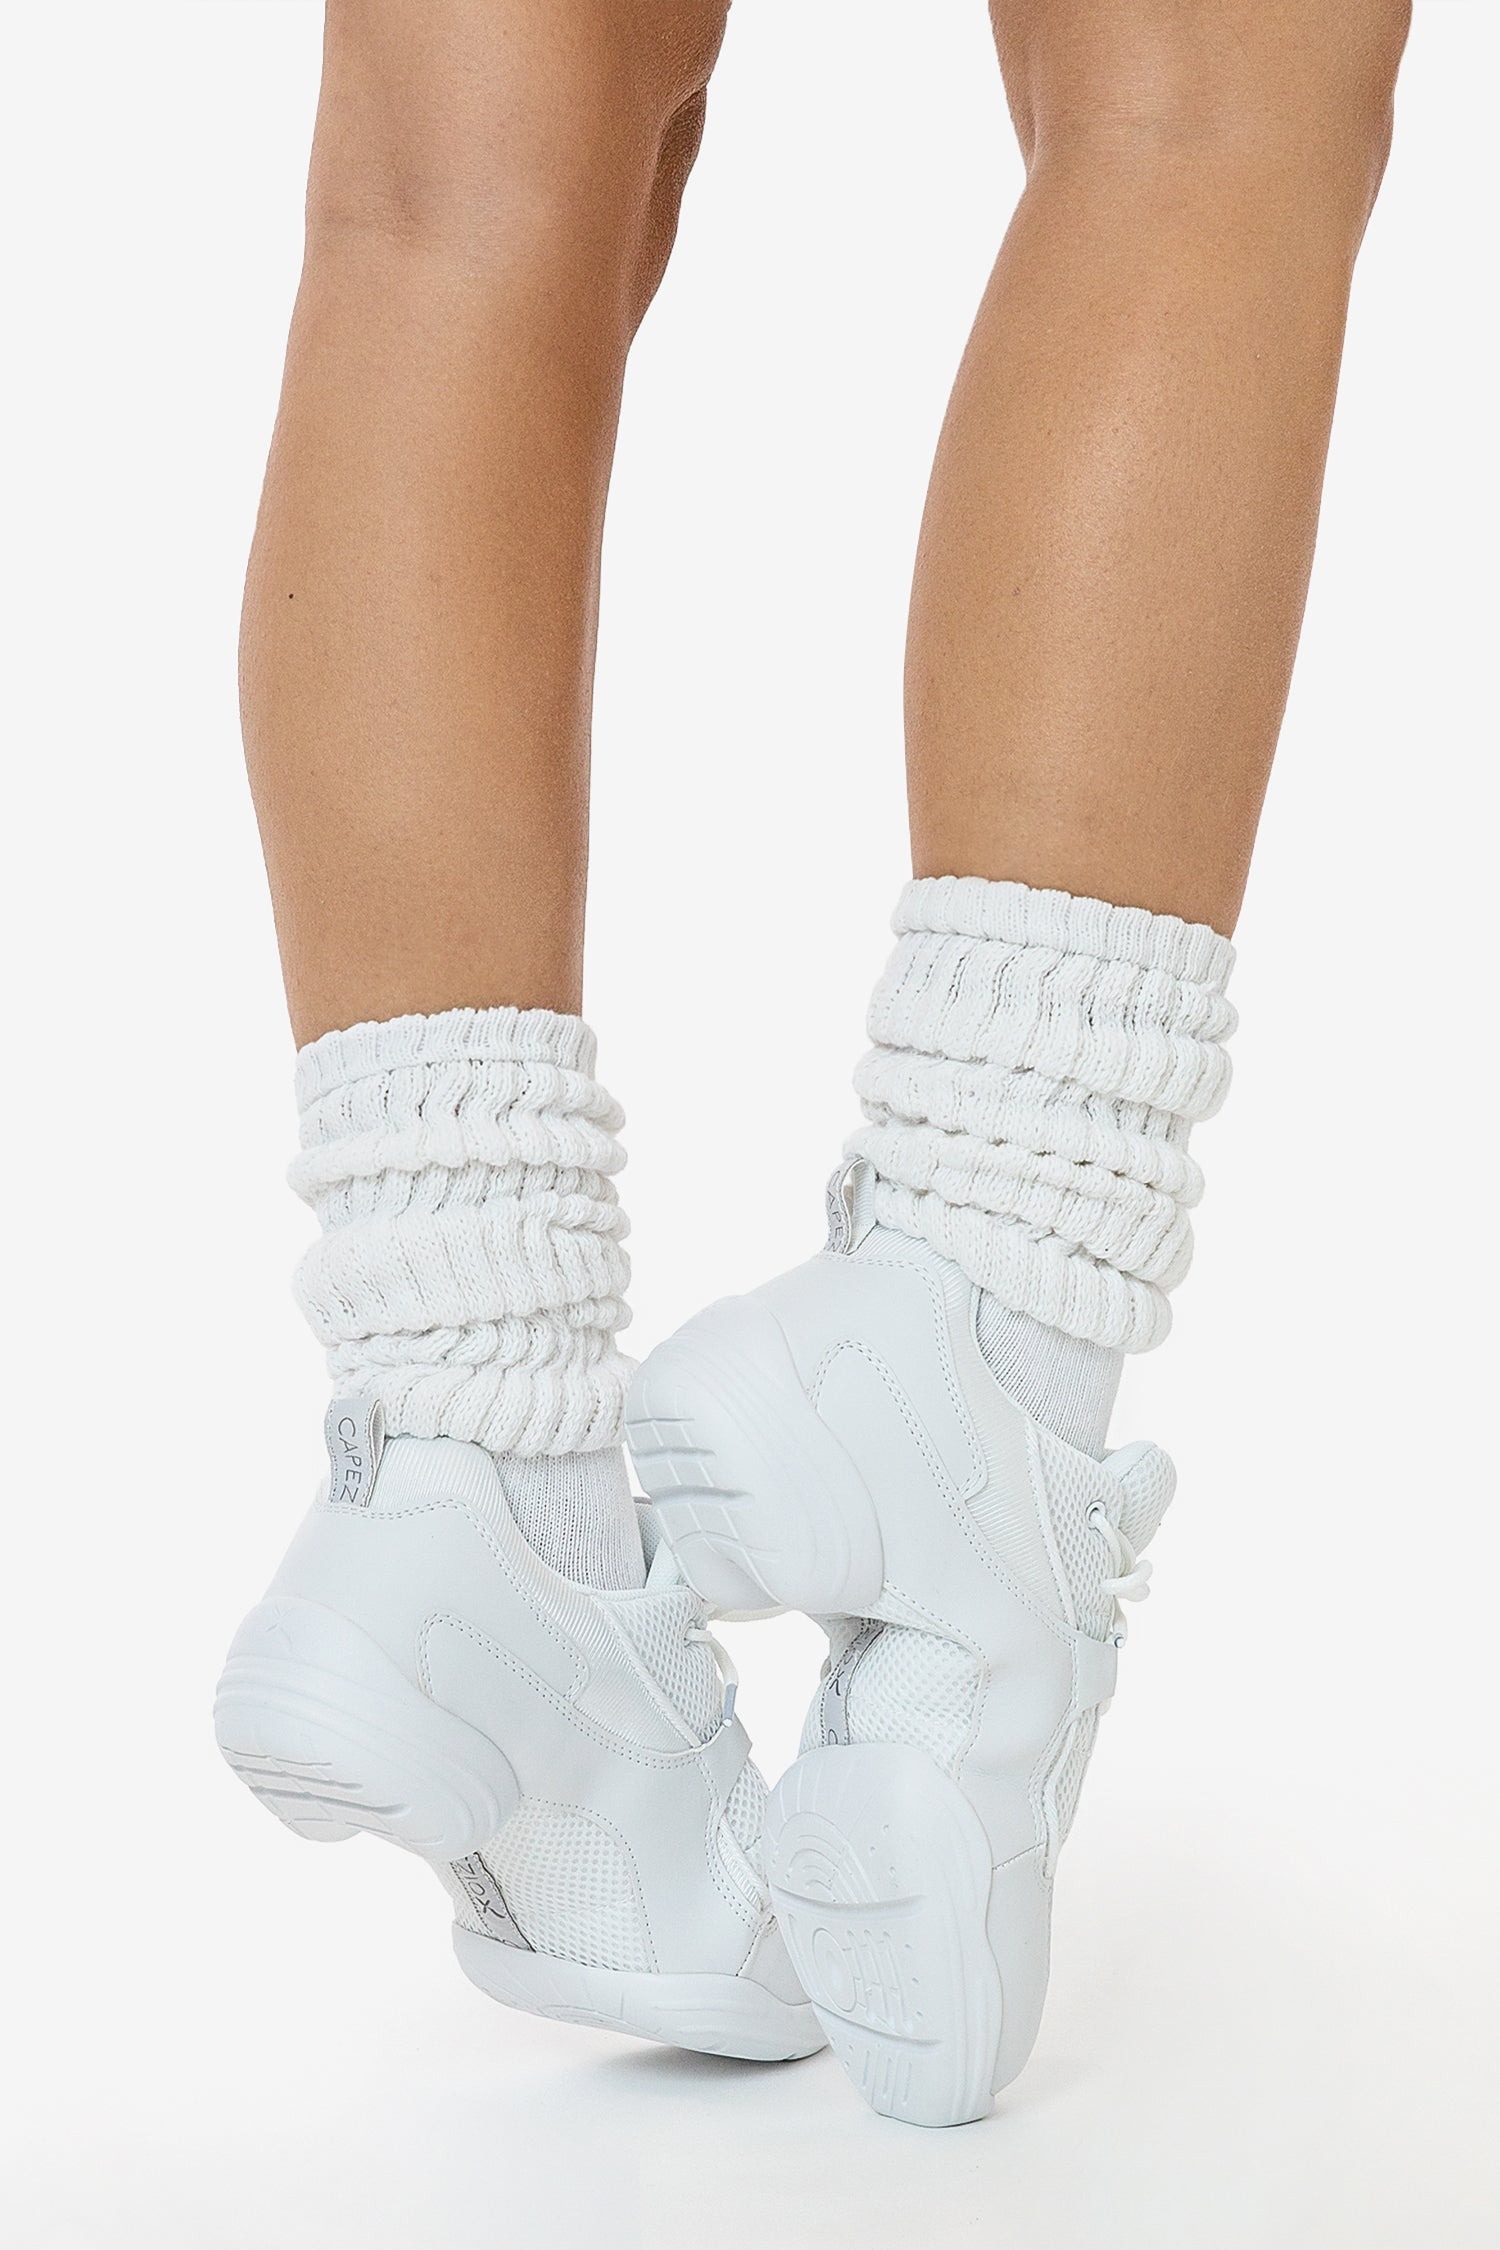 Slouchy White Socks: Shop The Trend - Vogue Australia